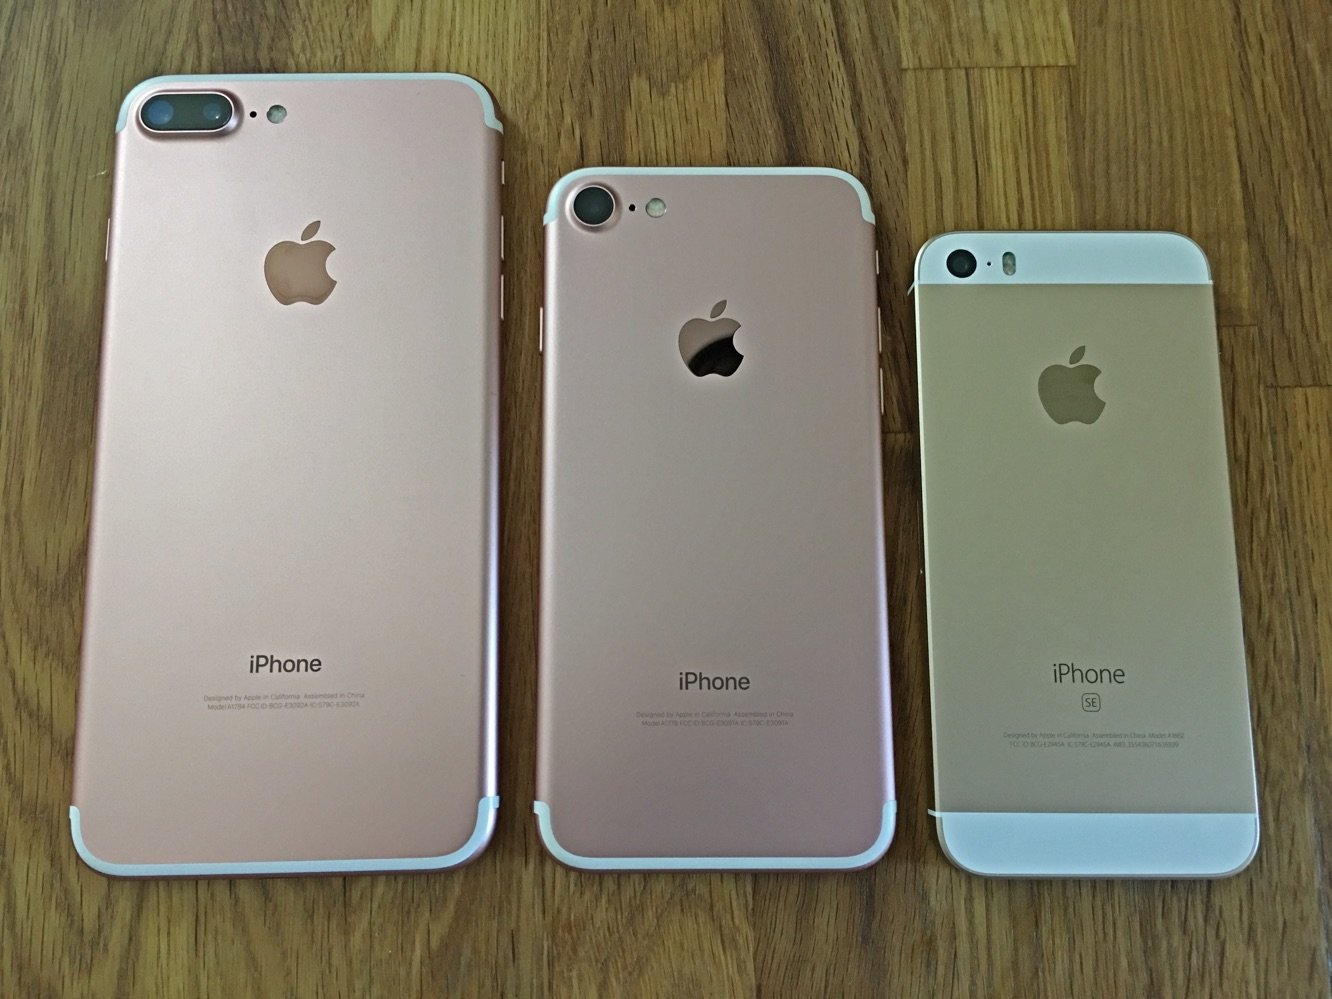 iPhone 7 and iPhone 7 Plus: Unboxing + comparison photos